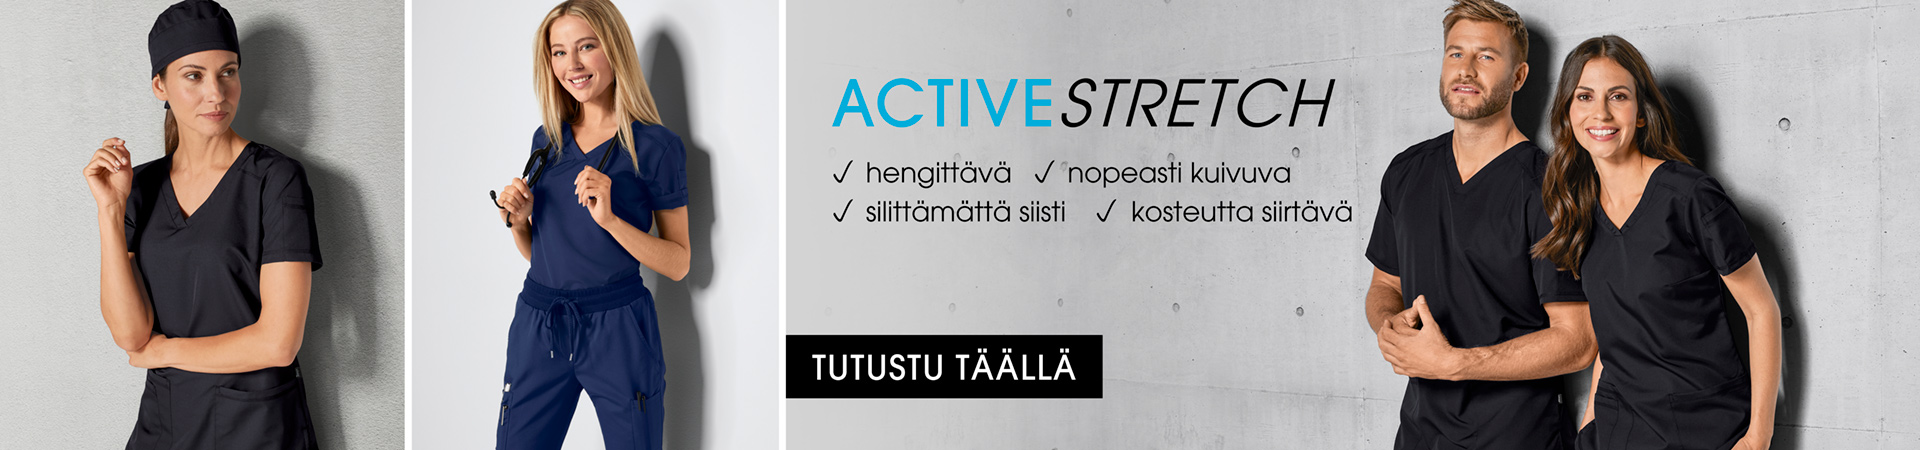 Työvaatteet Active-Stretch Praxis Praxis 7days